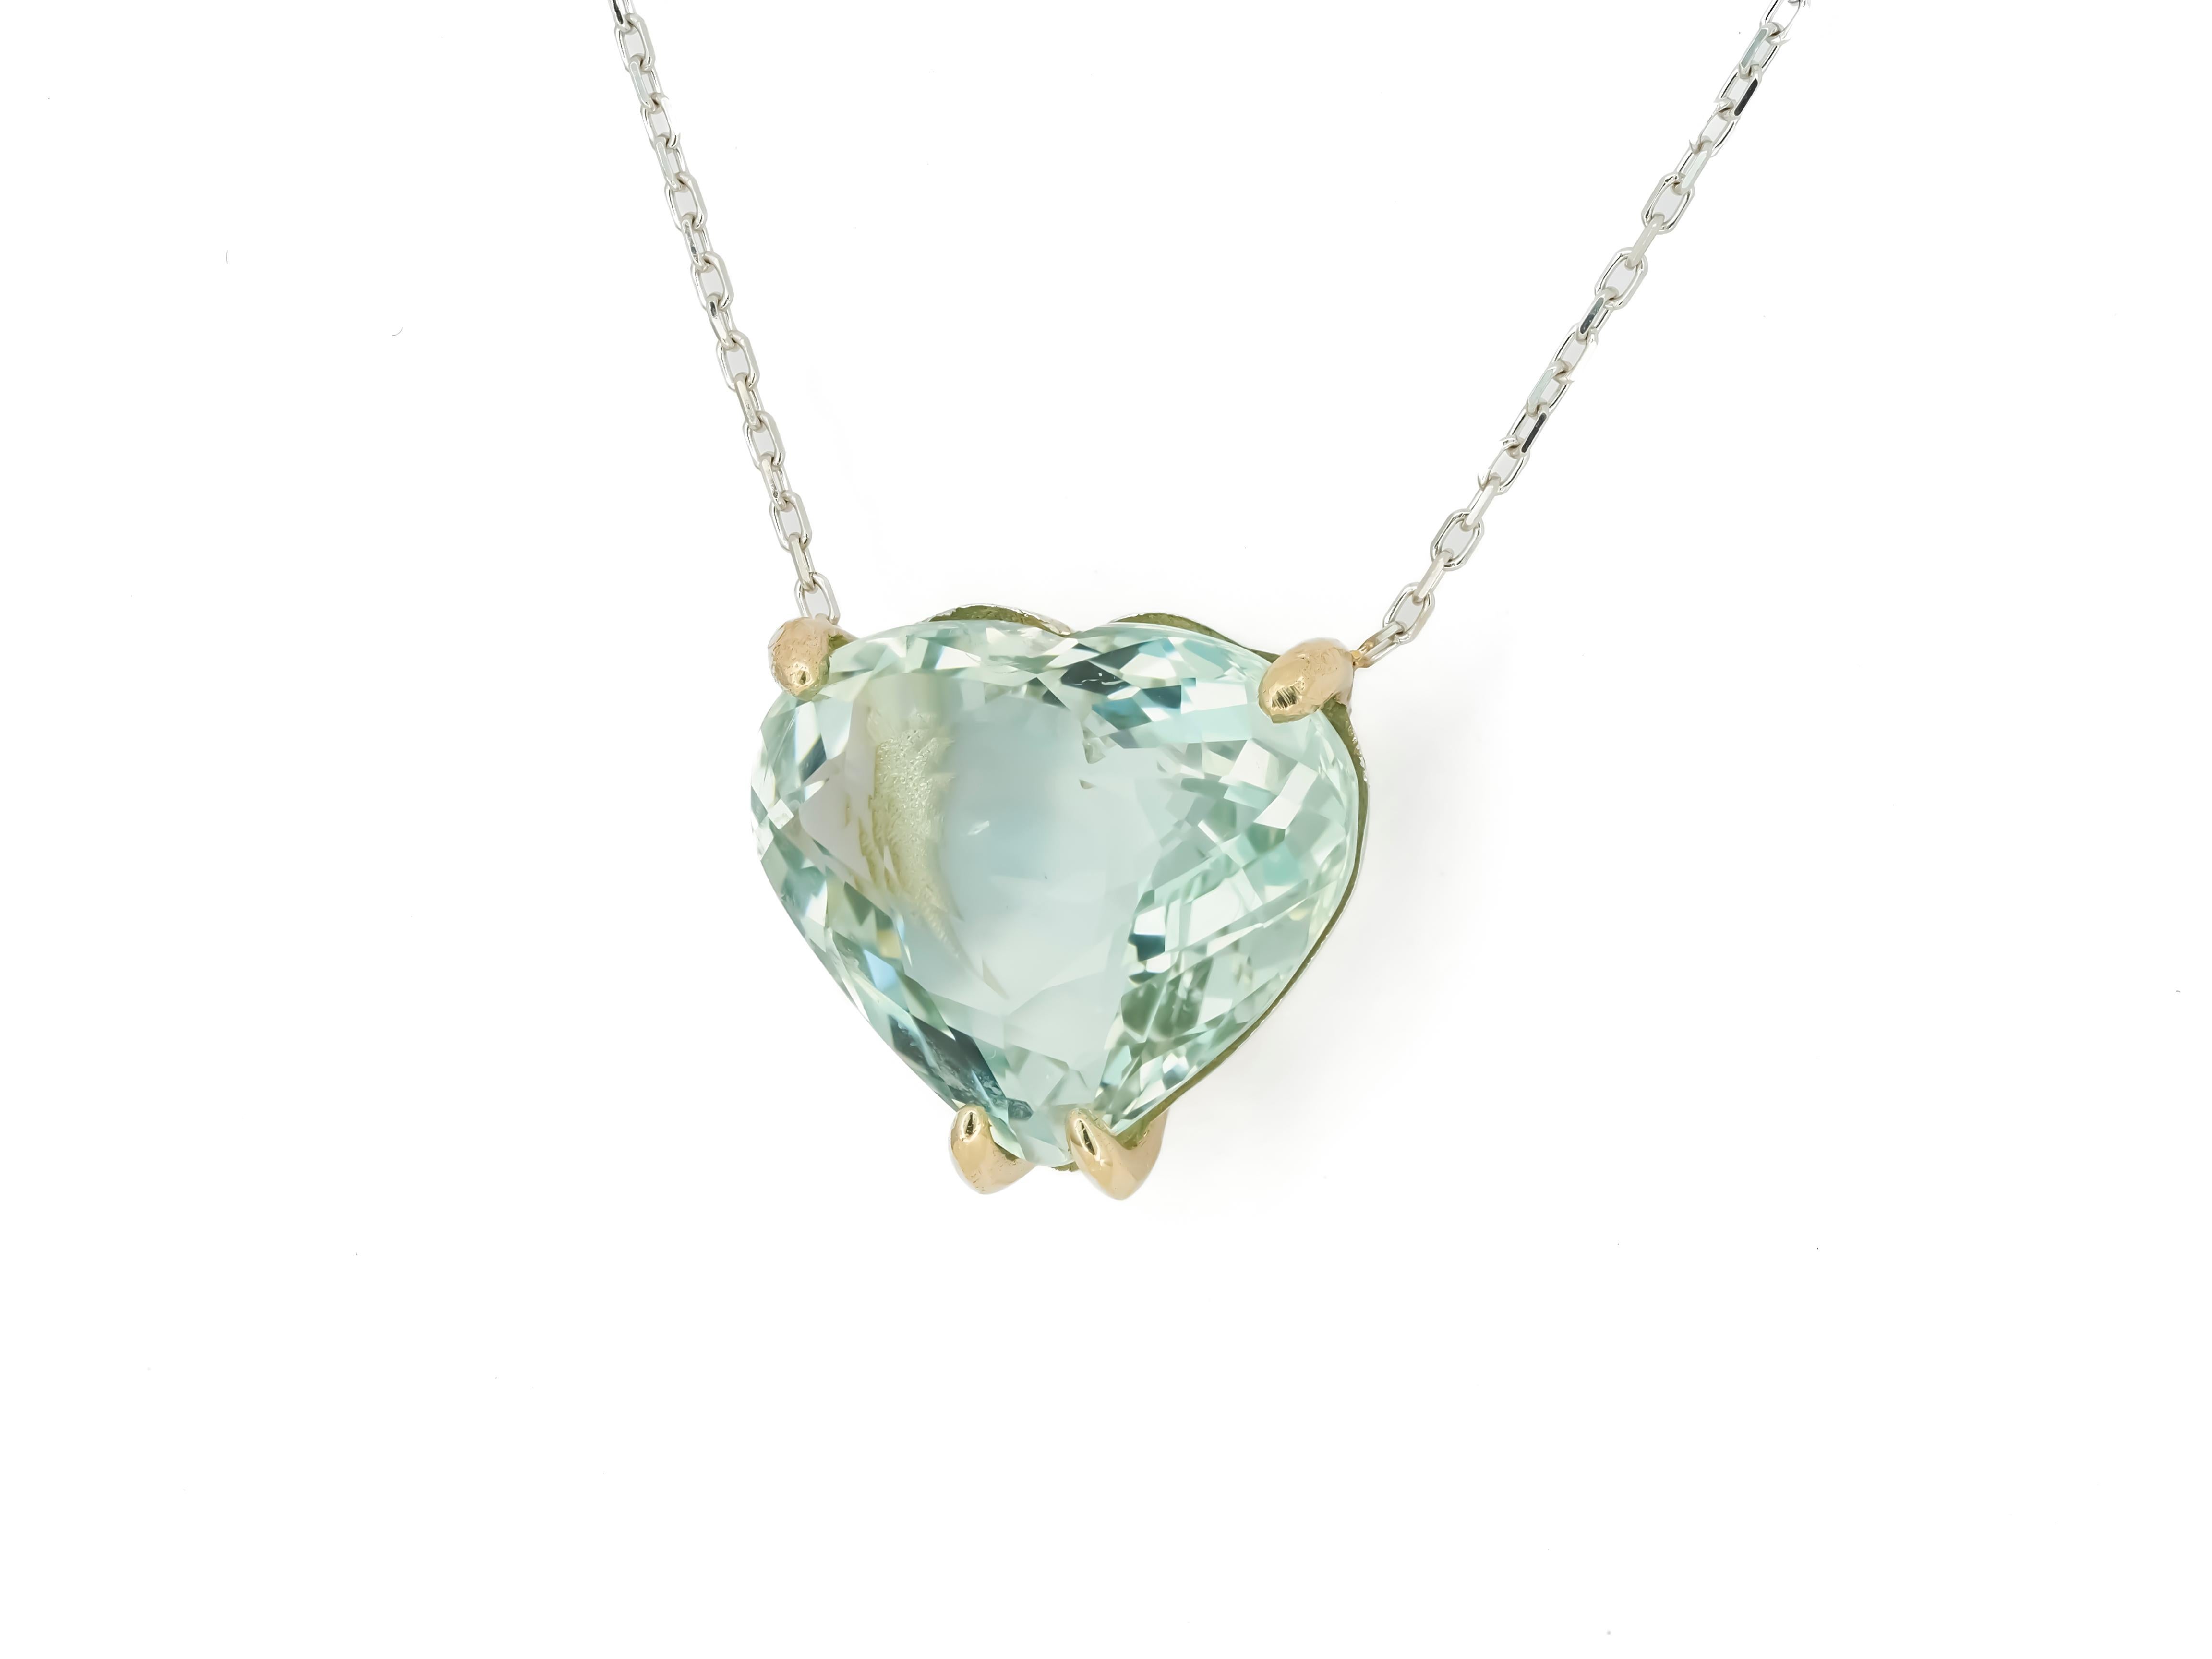 Heart Shaped Aquamarine Pendant Necklace in 14k White Gold 2